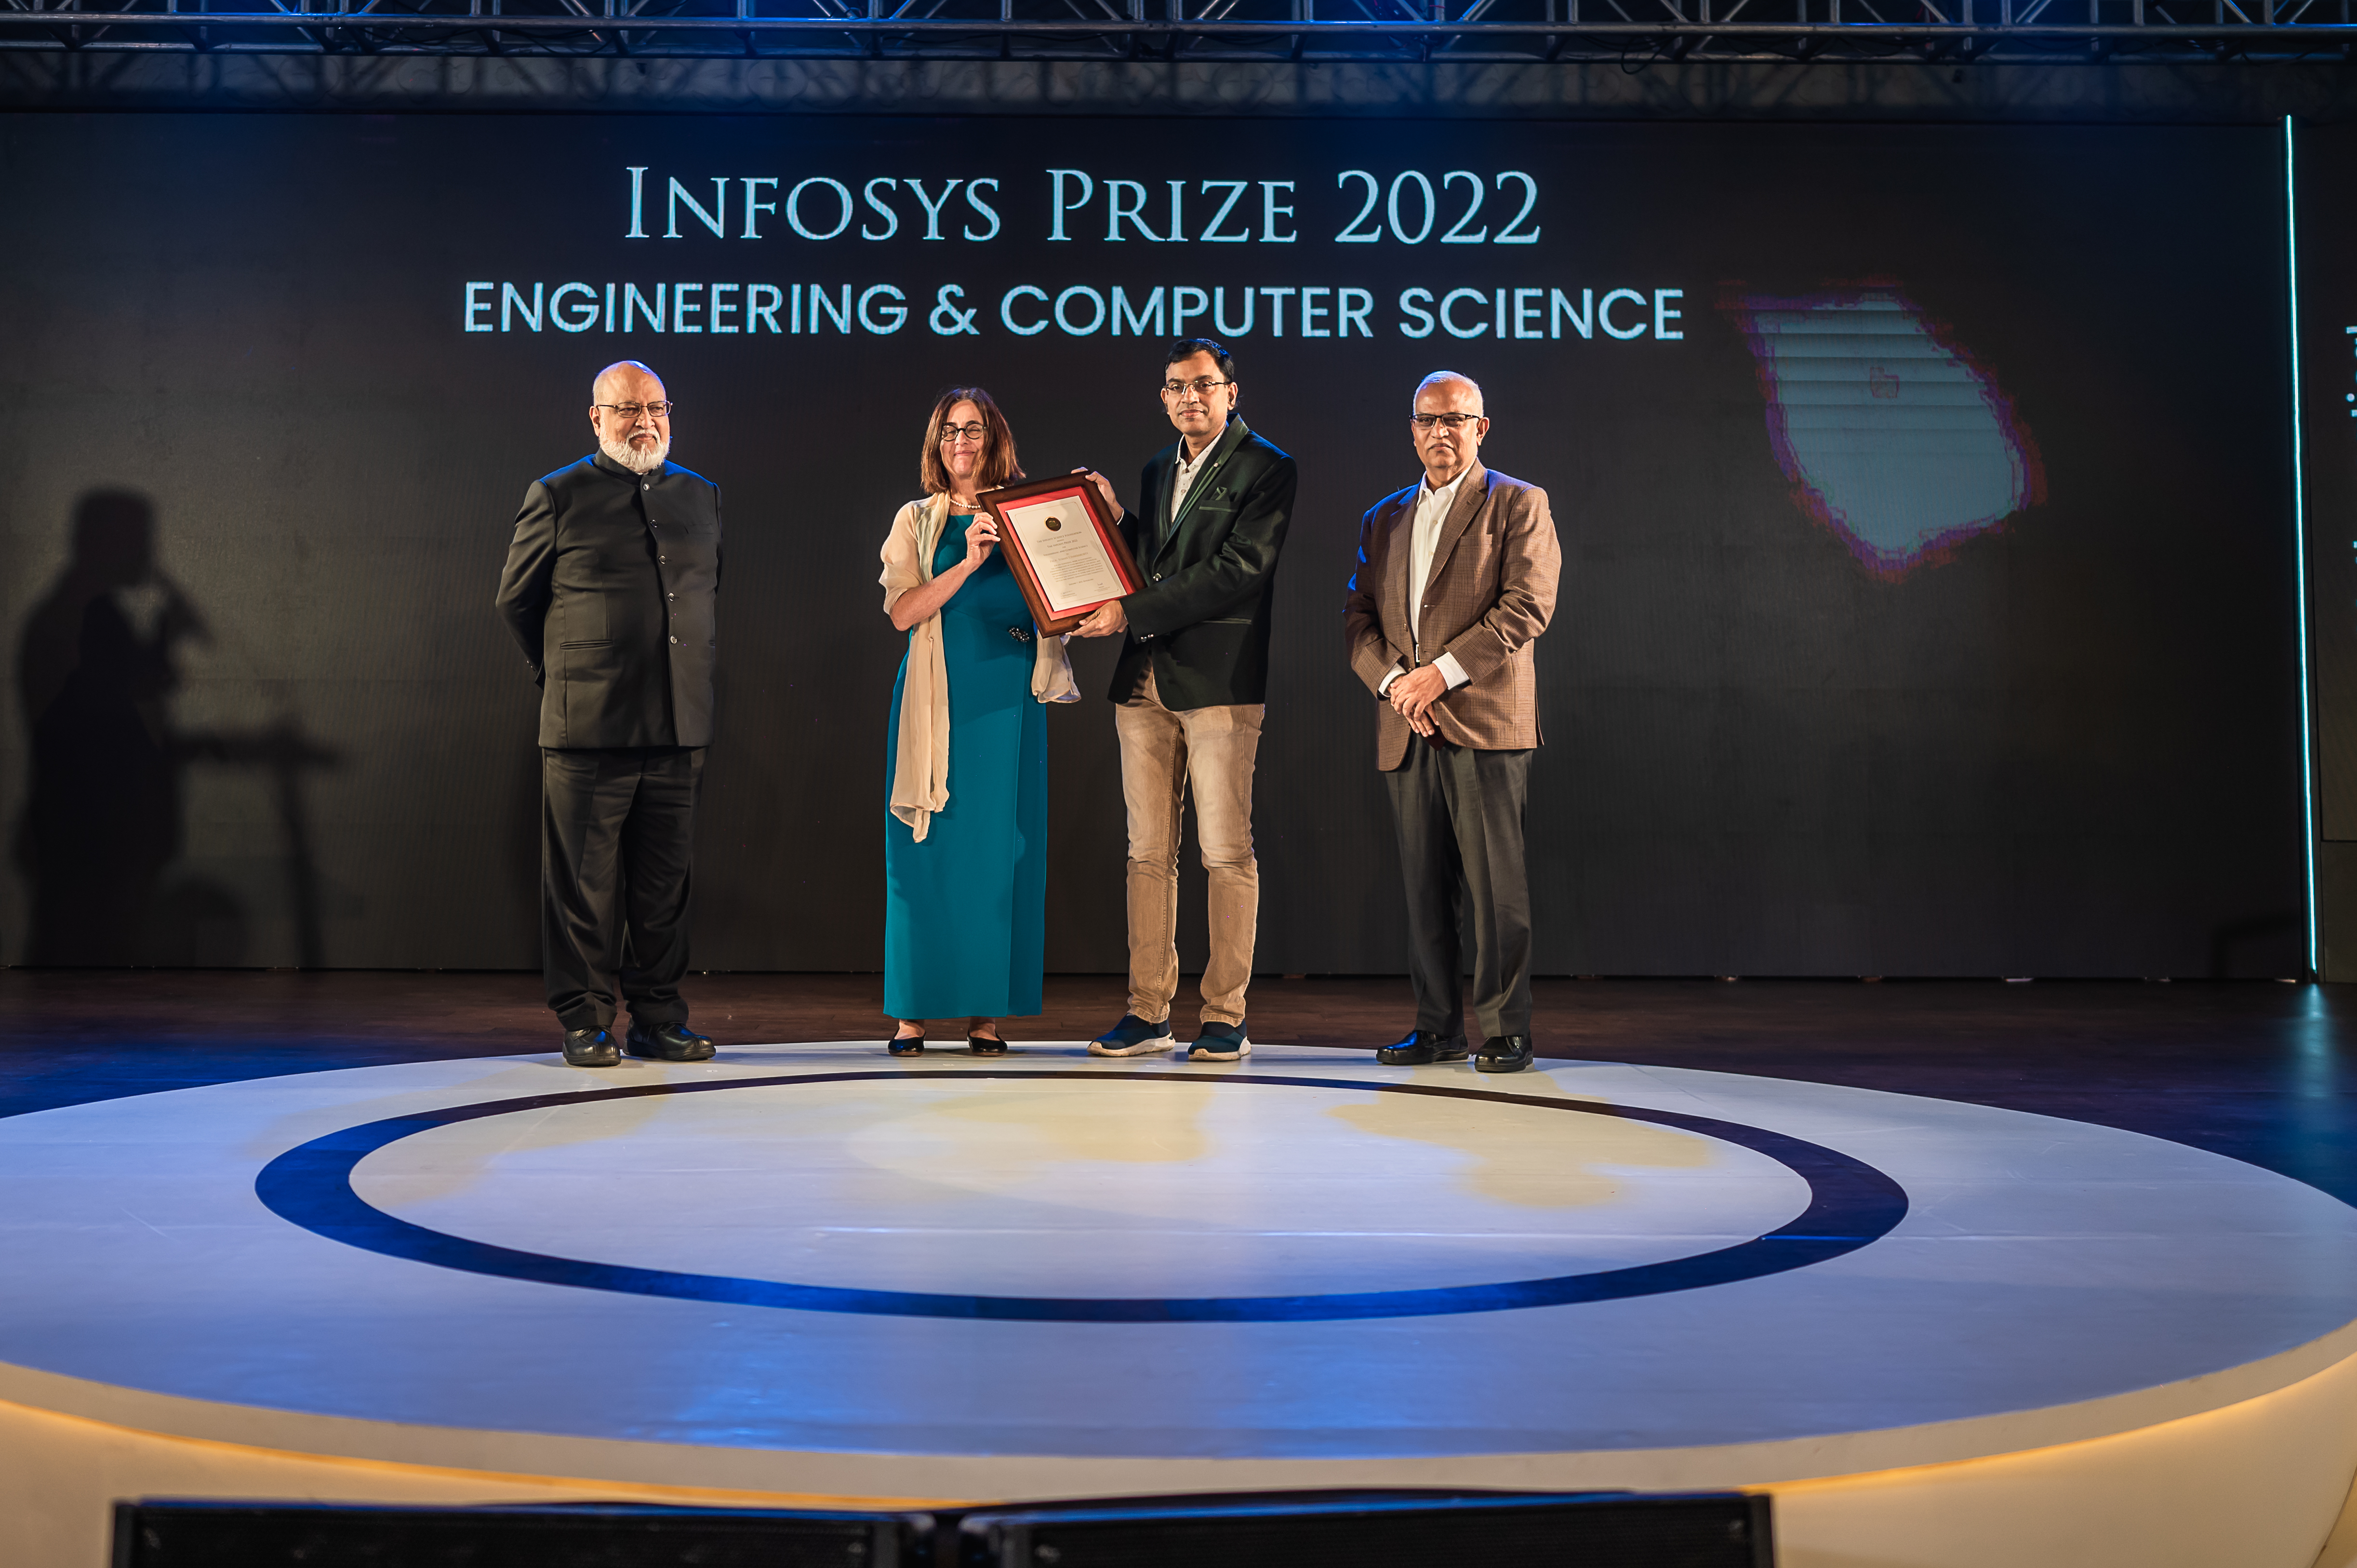 Prof. Arvind, Prof. Shafi Goldwasser and Mr. Srinath Batni presenting the Infosys Prize 2022 to Prof. Suman Chakraborty